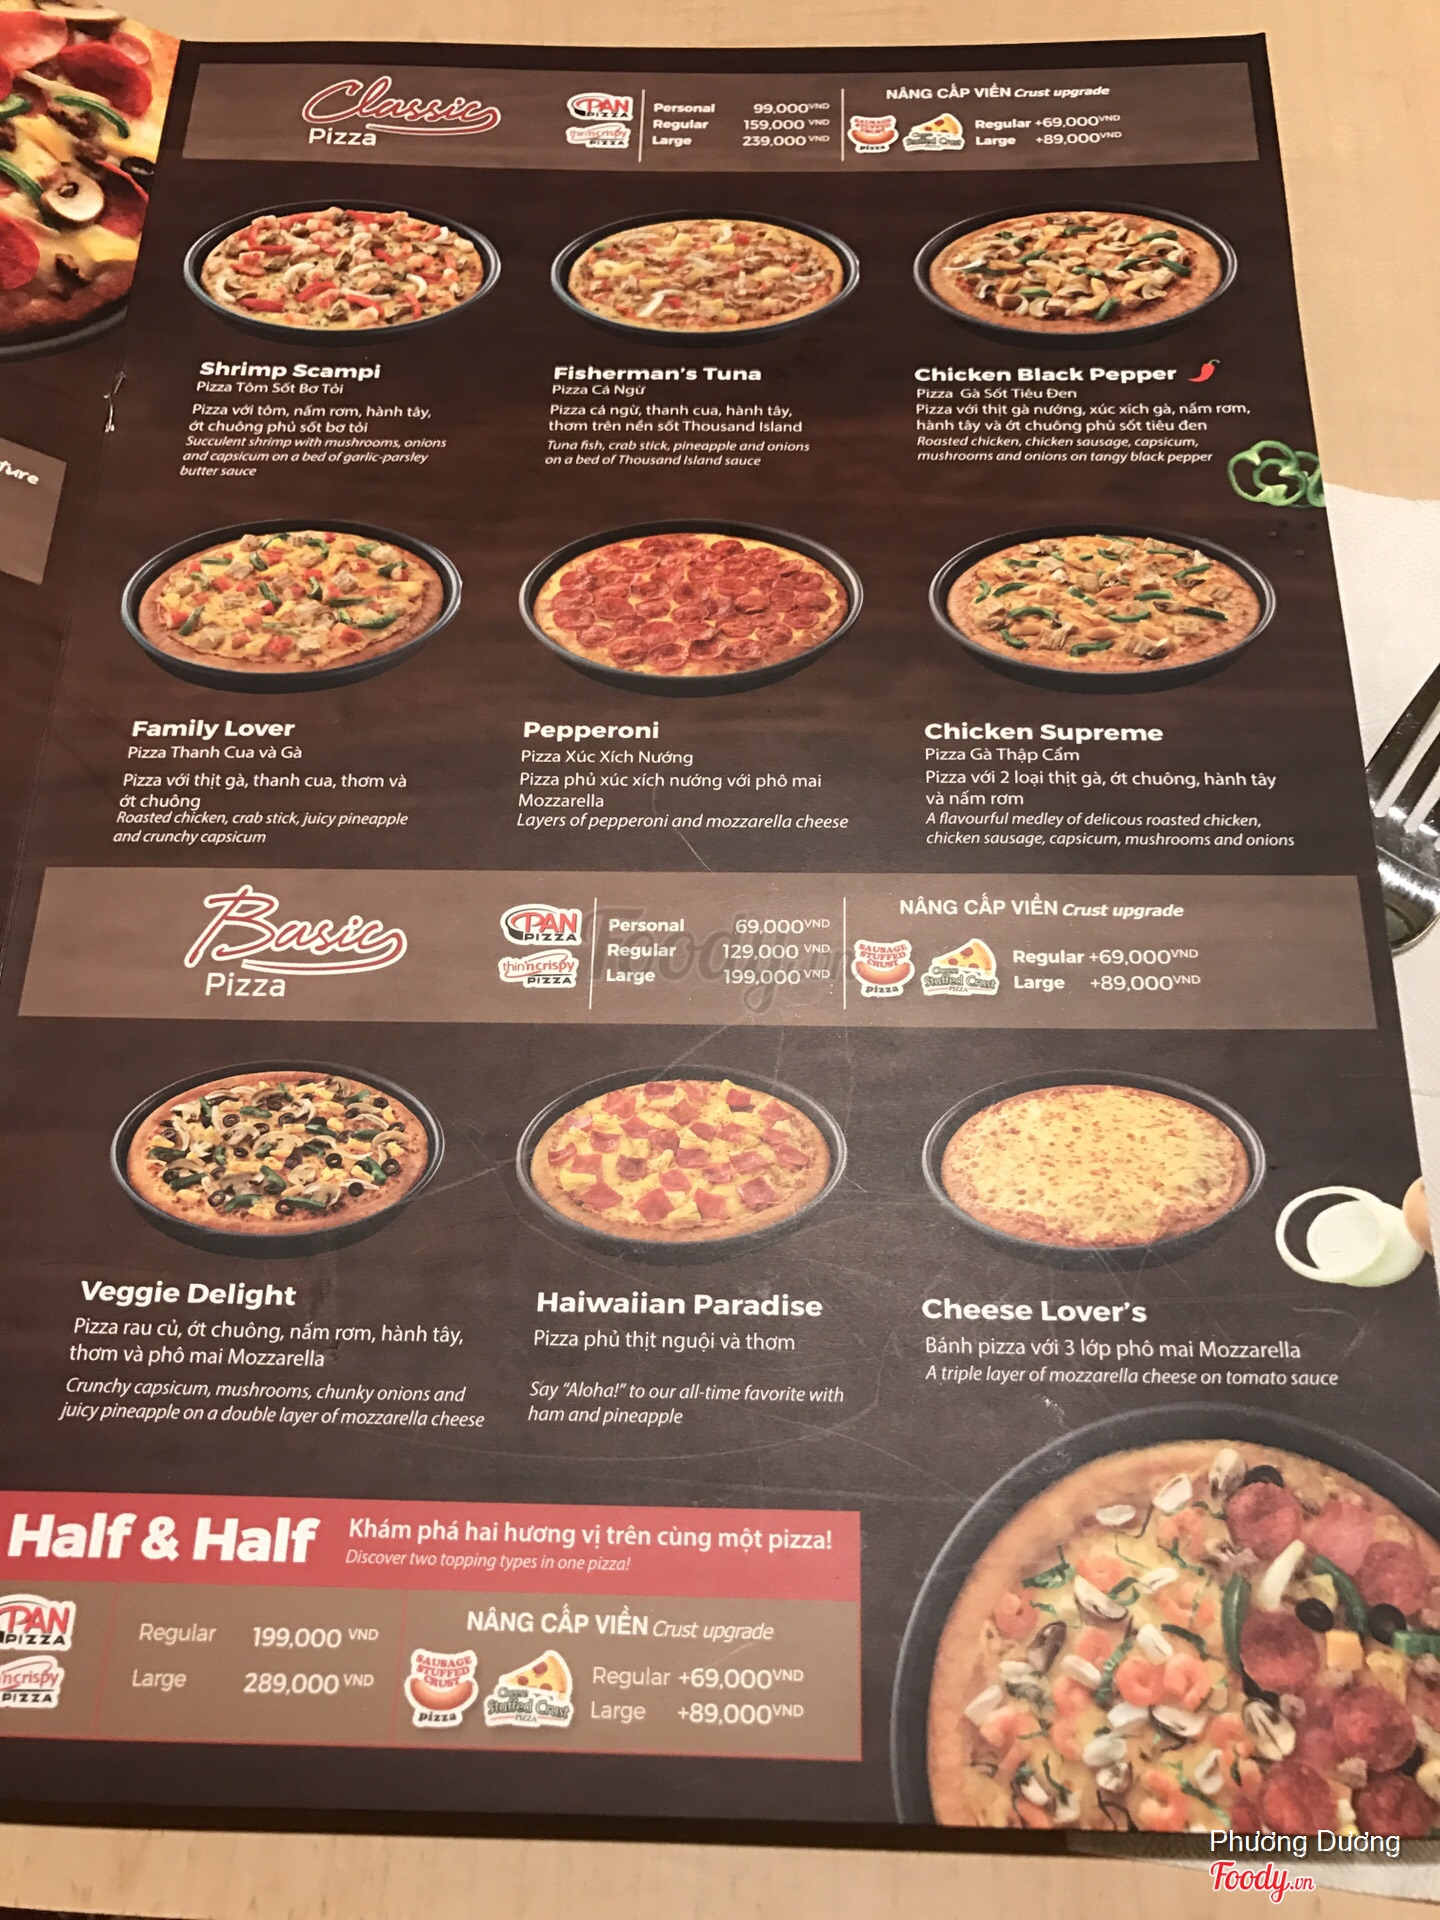 Pizza Hut - Thomson Plaza: Menu, Delivery, Promo | GrabFood SG